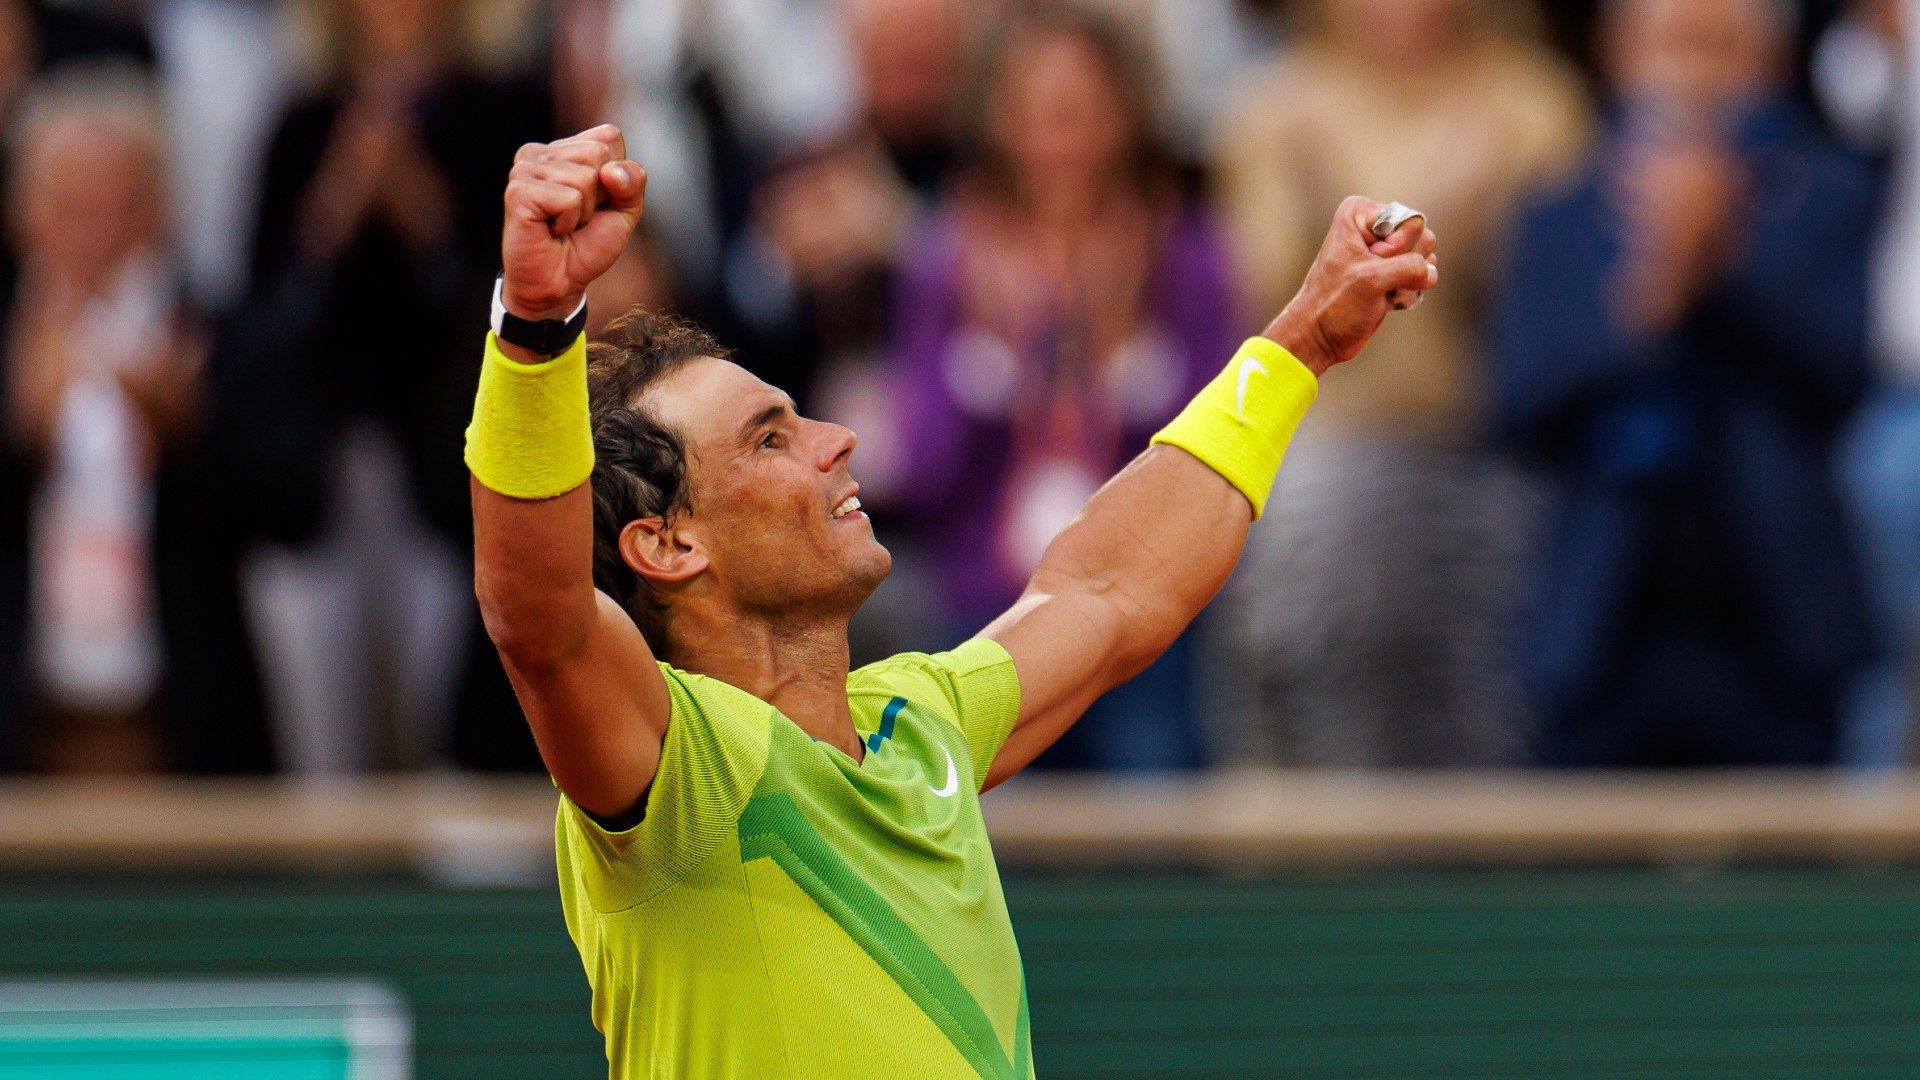 Roland Garros 2022 Rafael Nadal beats Felix Auger-Aliassime in five sets, will play Novak Djokovic